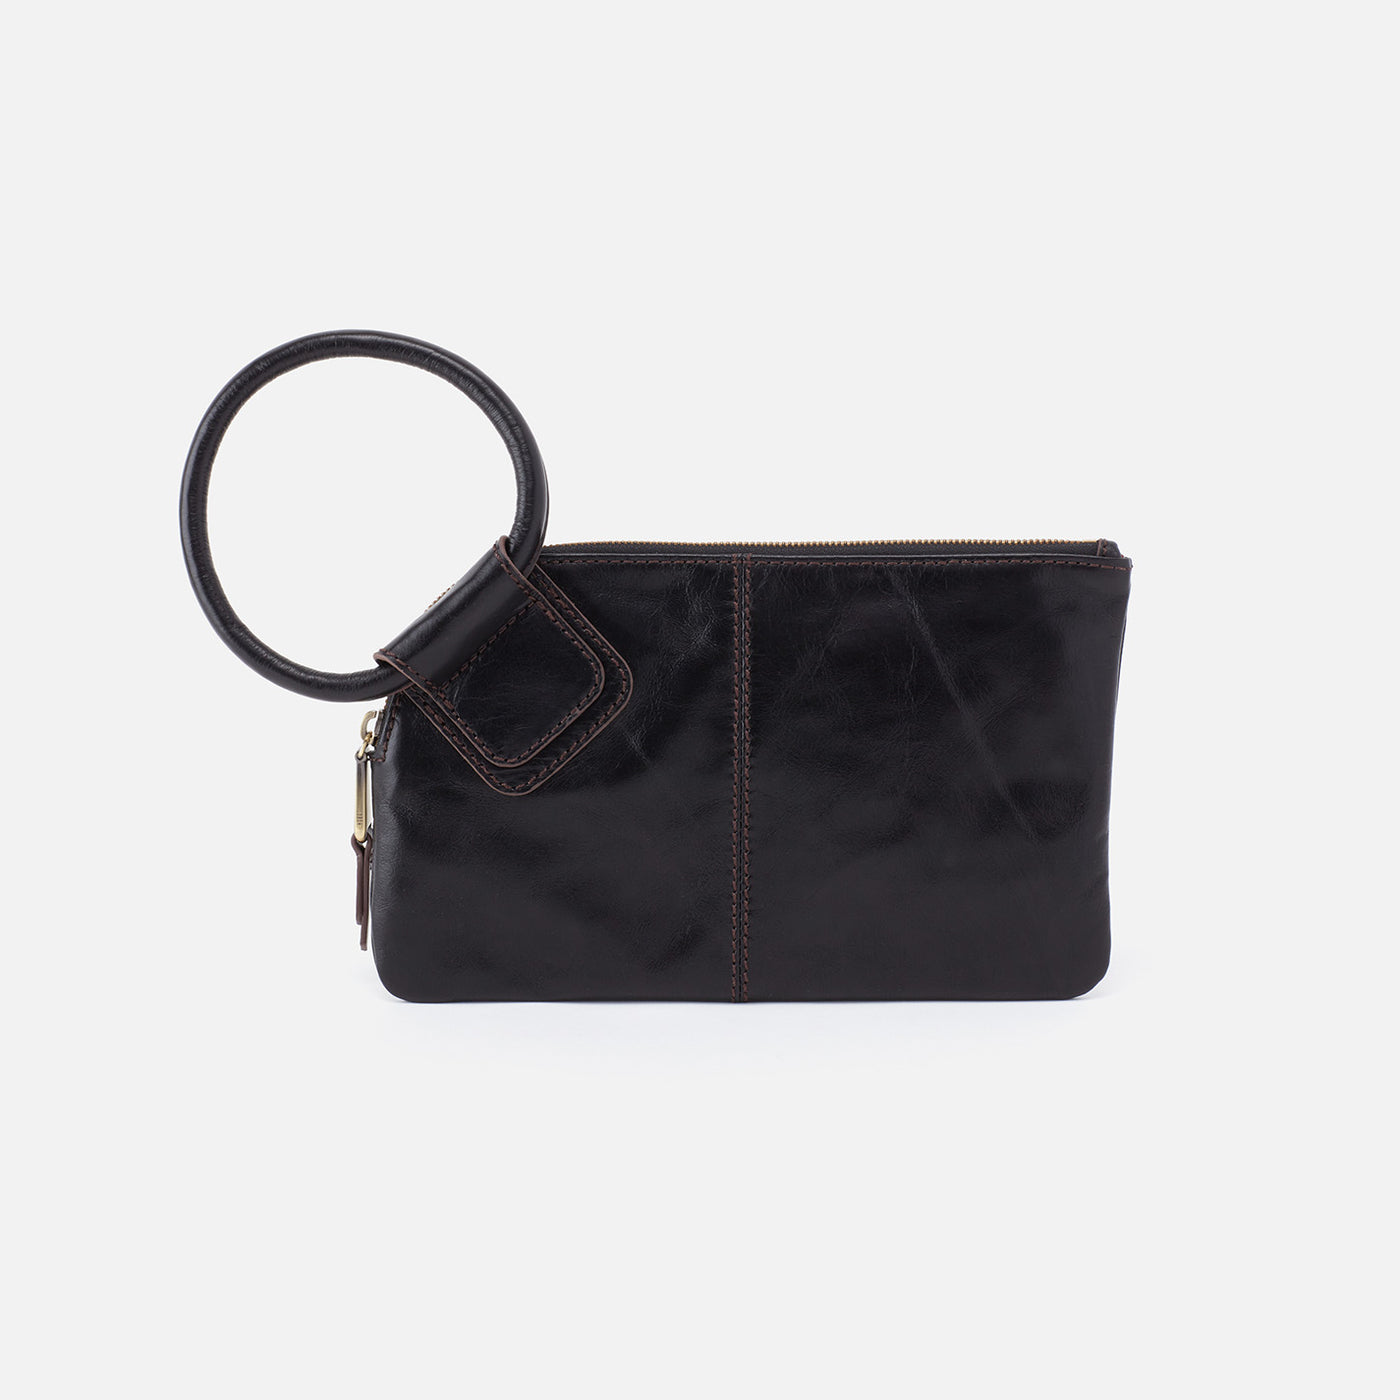 Mini Key Wallet Handbag, Clutch Bag, Solid Color PU Leather